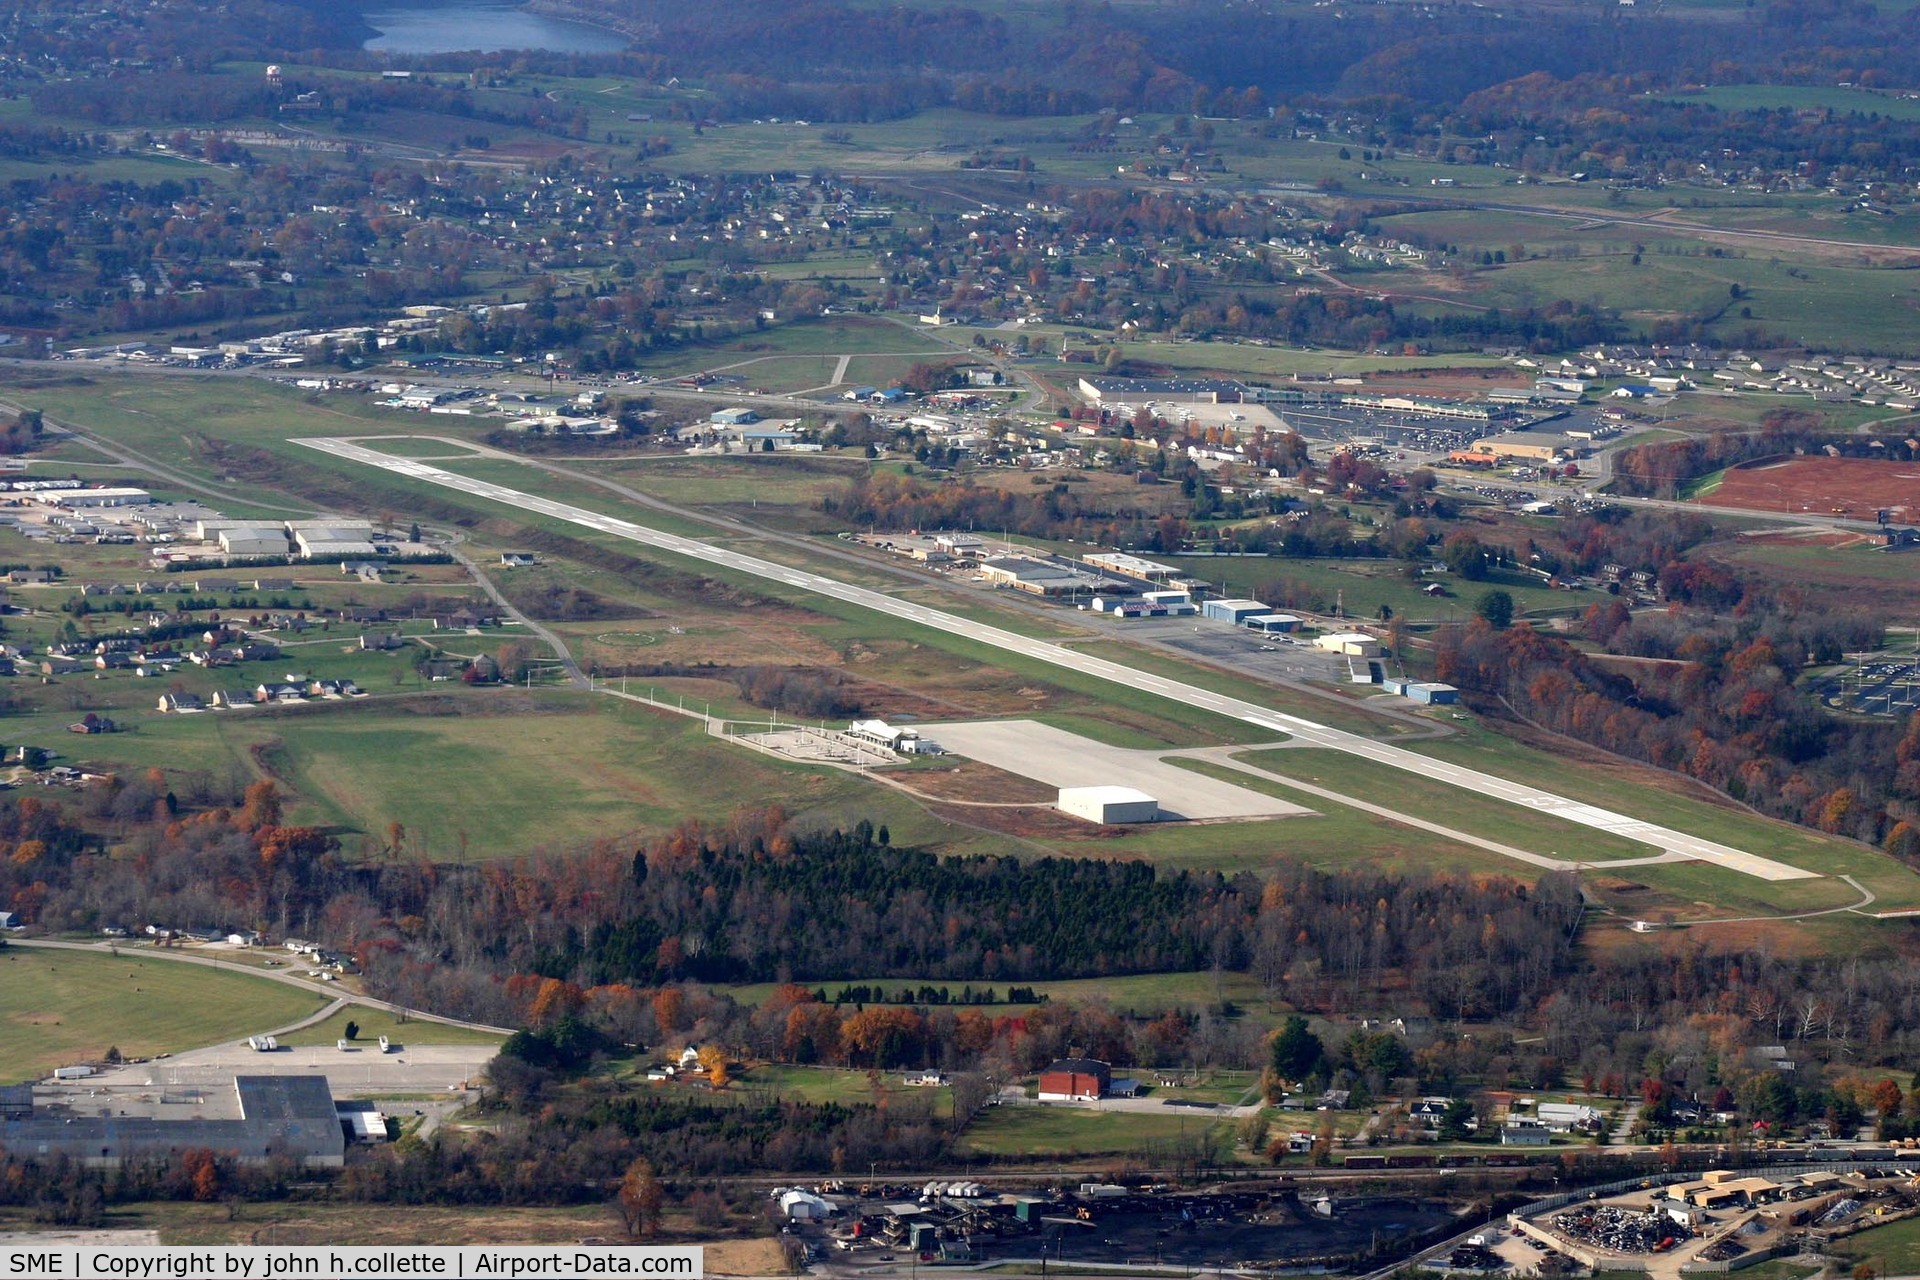 Lake Cumberland Regional Airport (SME) - looking northwest